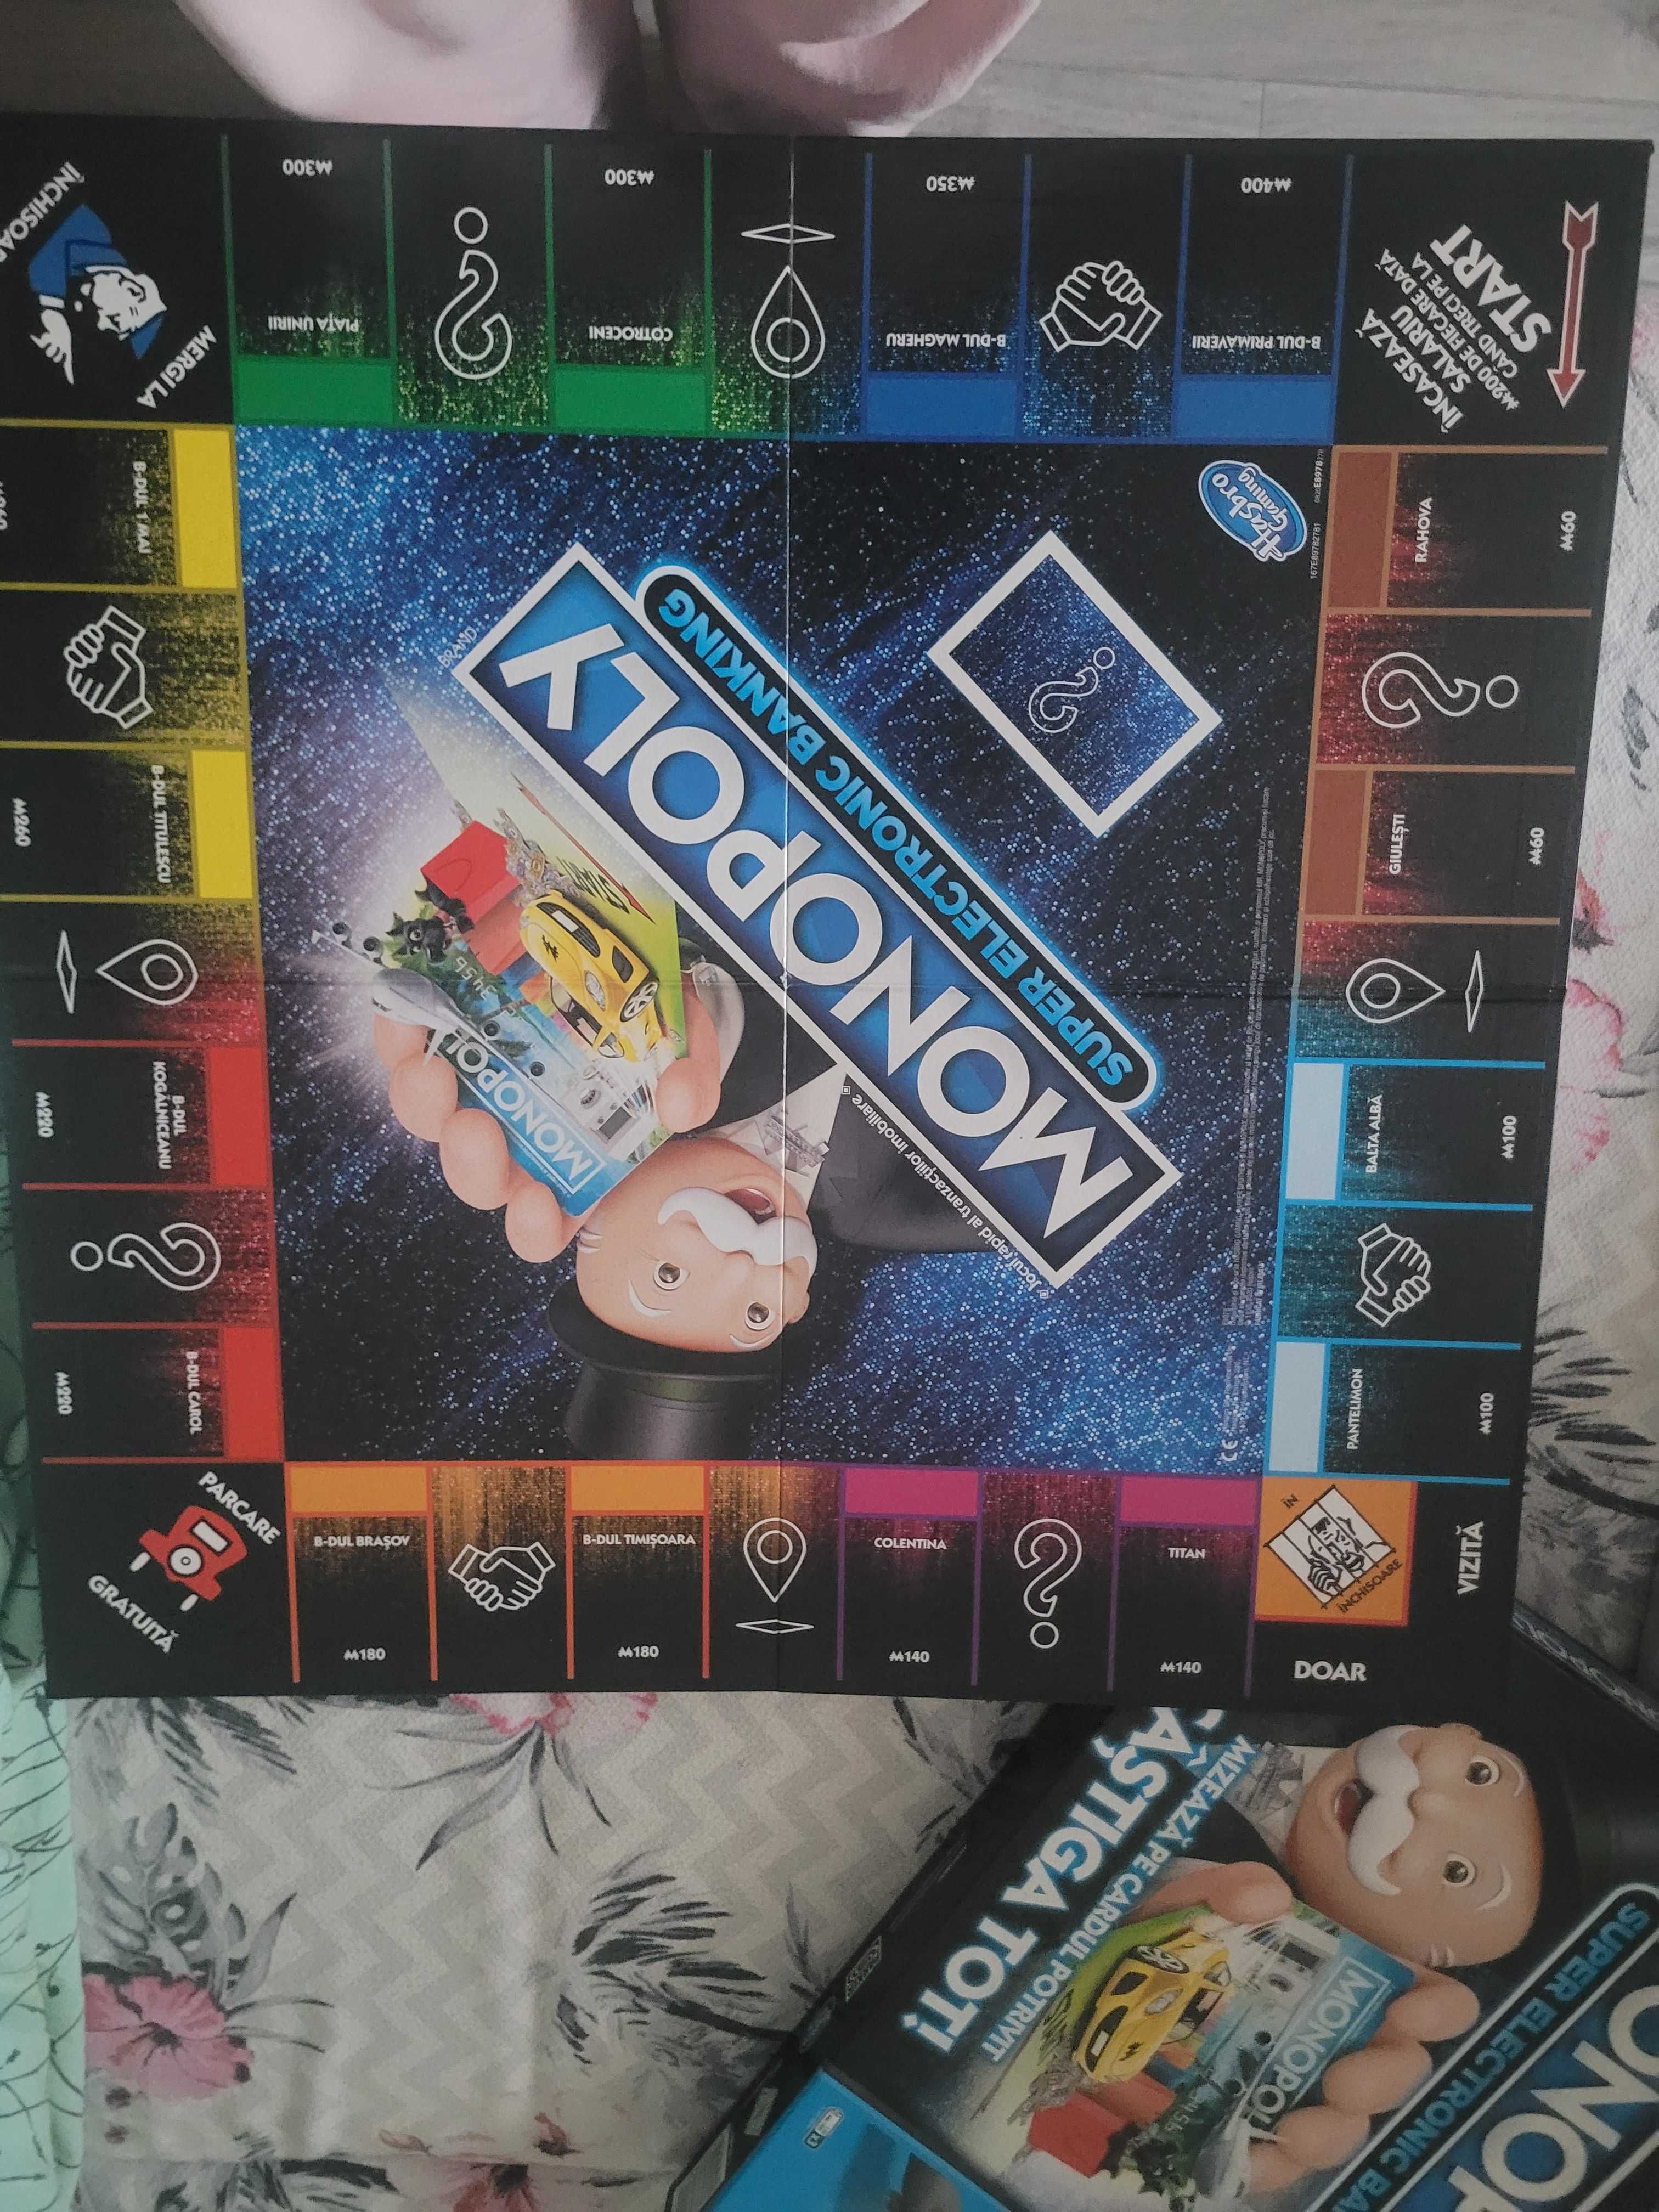 Monopoly electronic